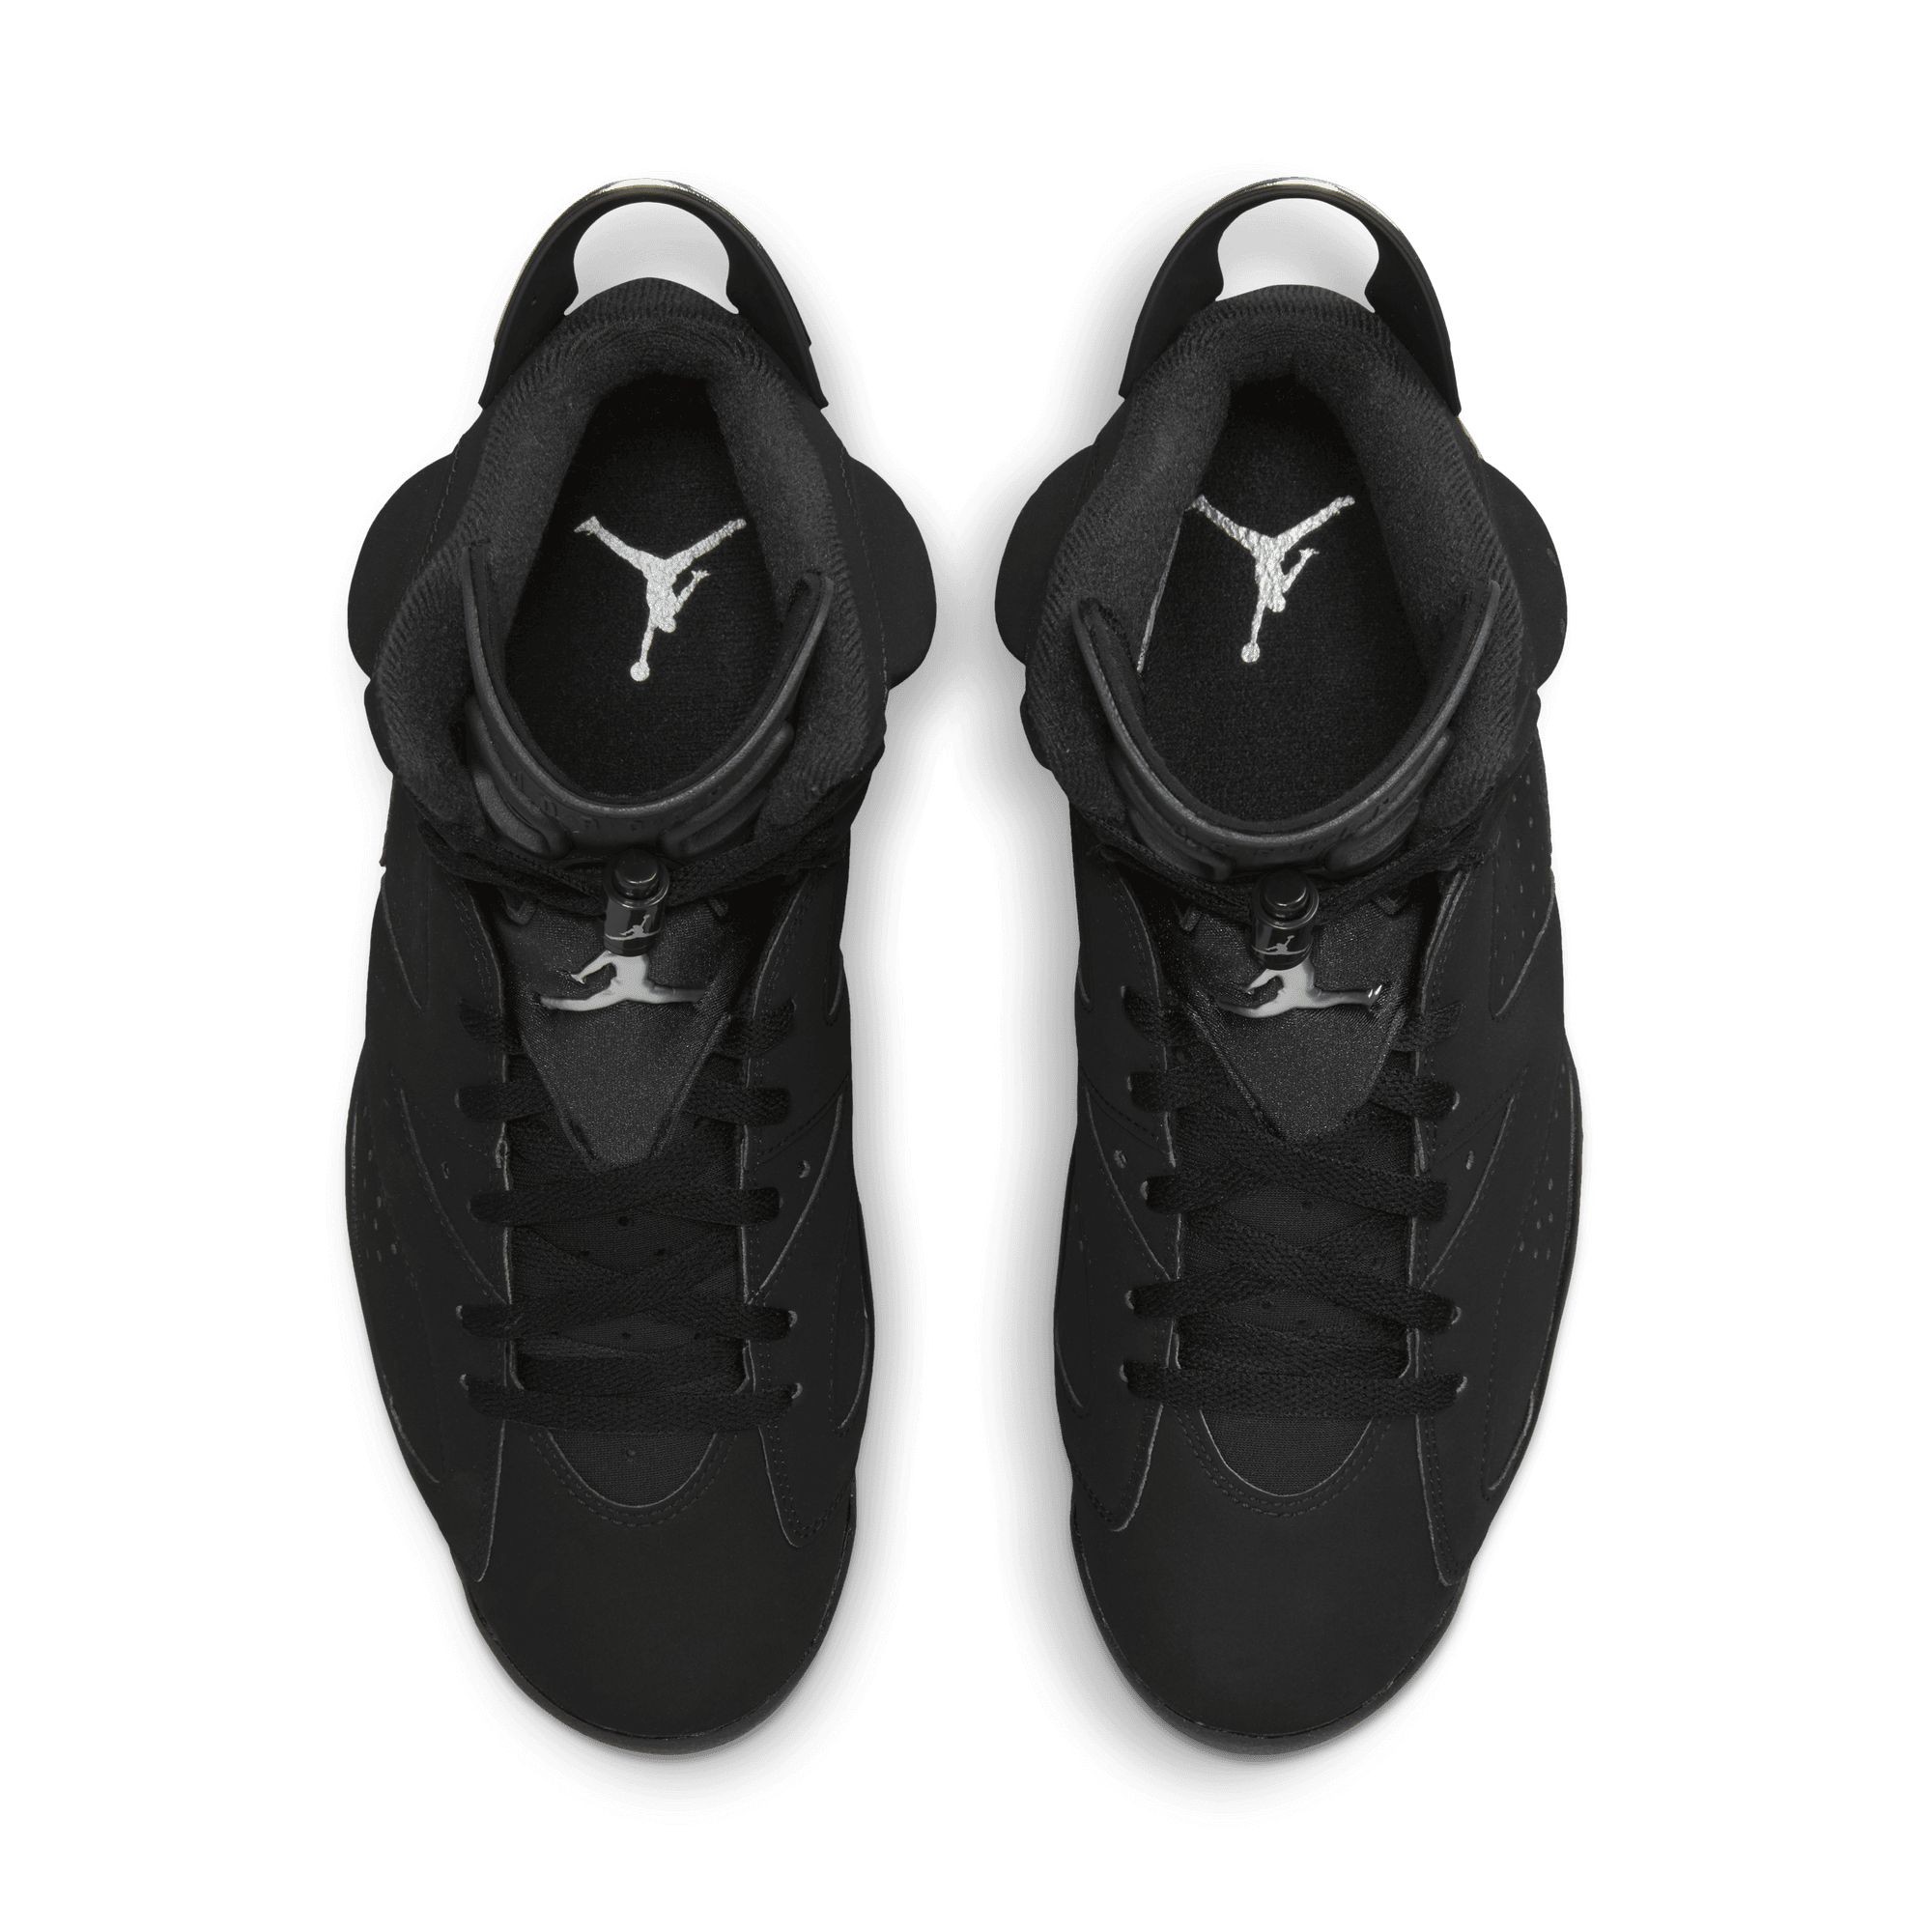 Air Jordan Footwear Air Jordan 6 Retro - Men's